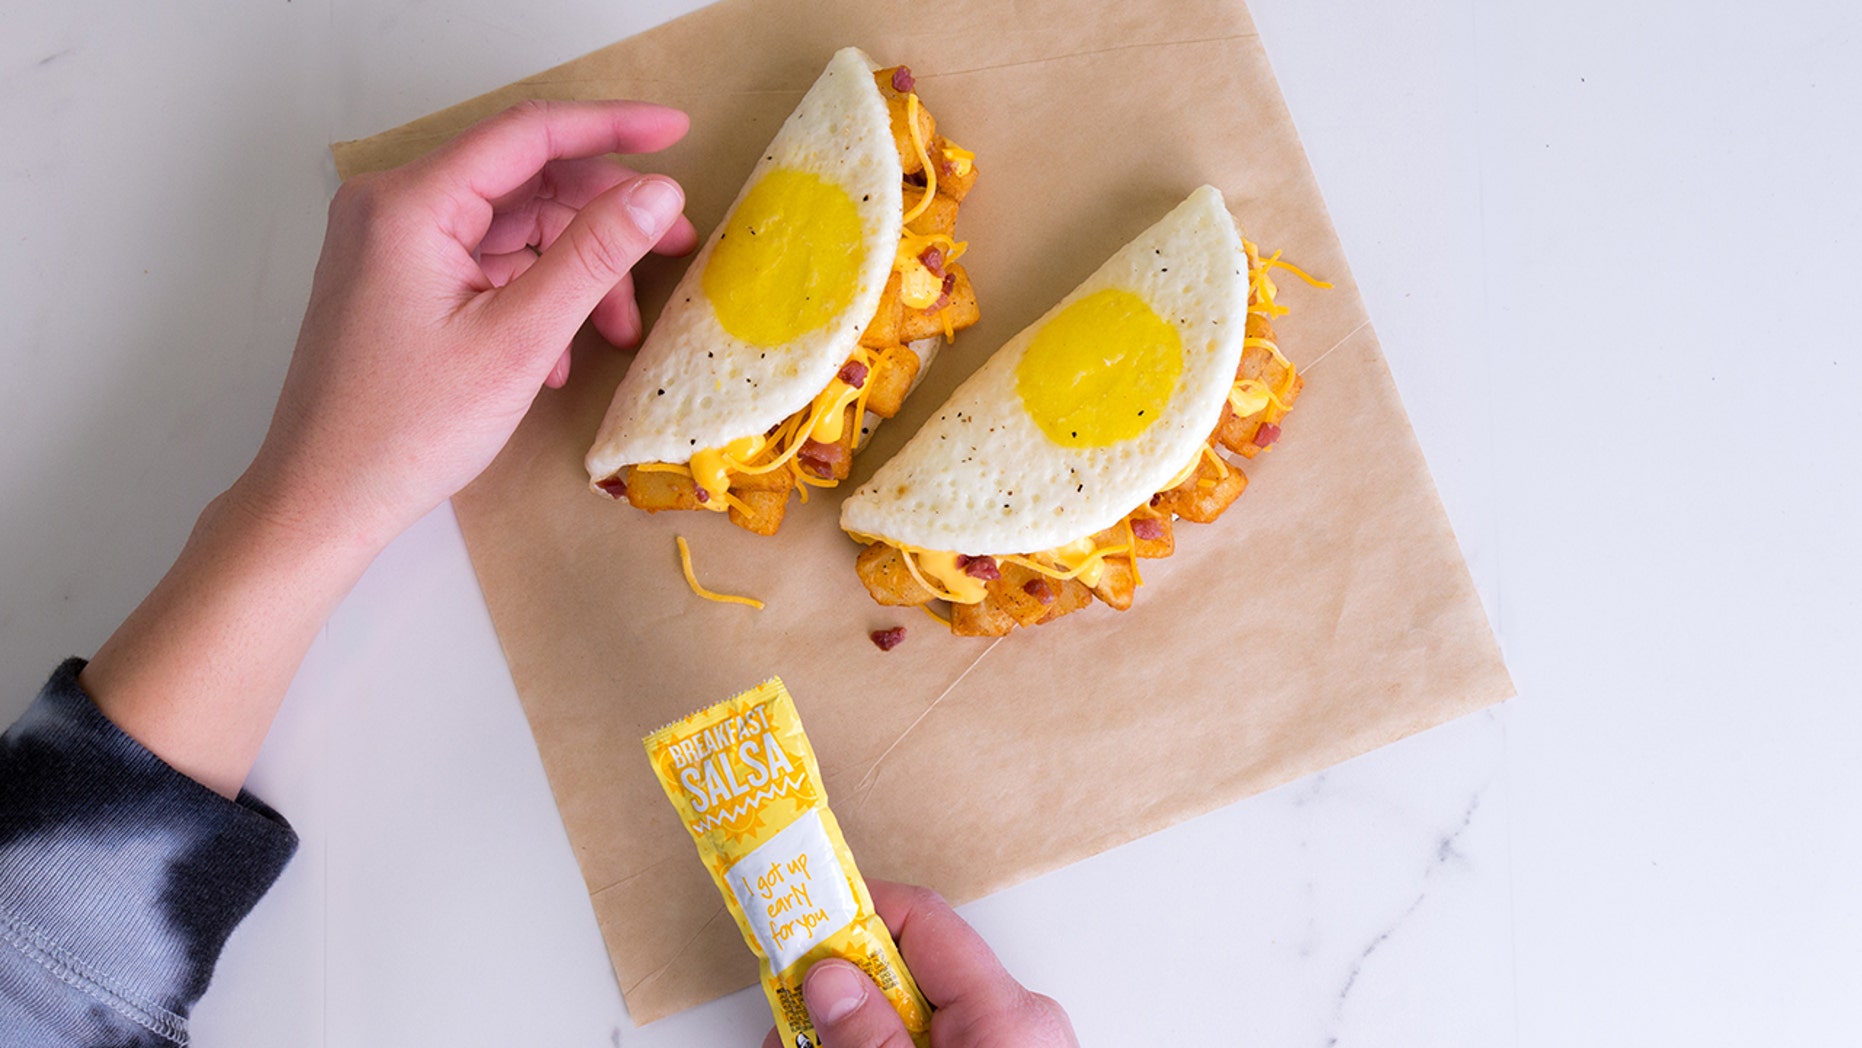 naked egg taco press release